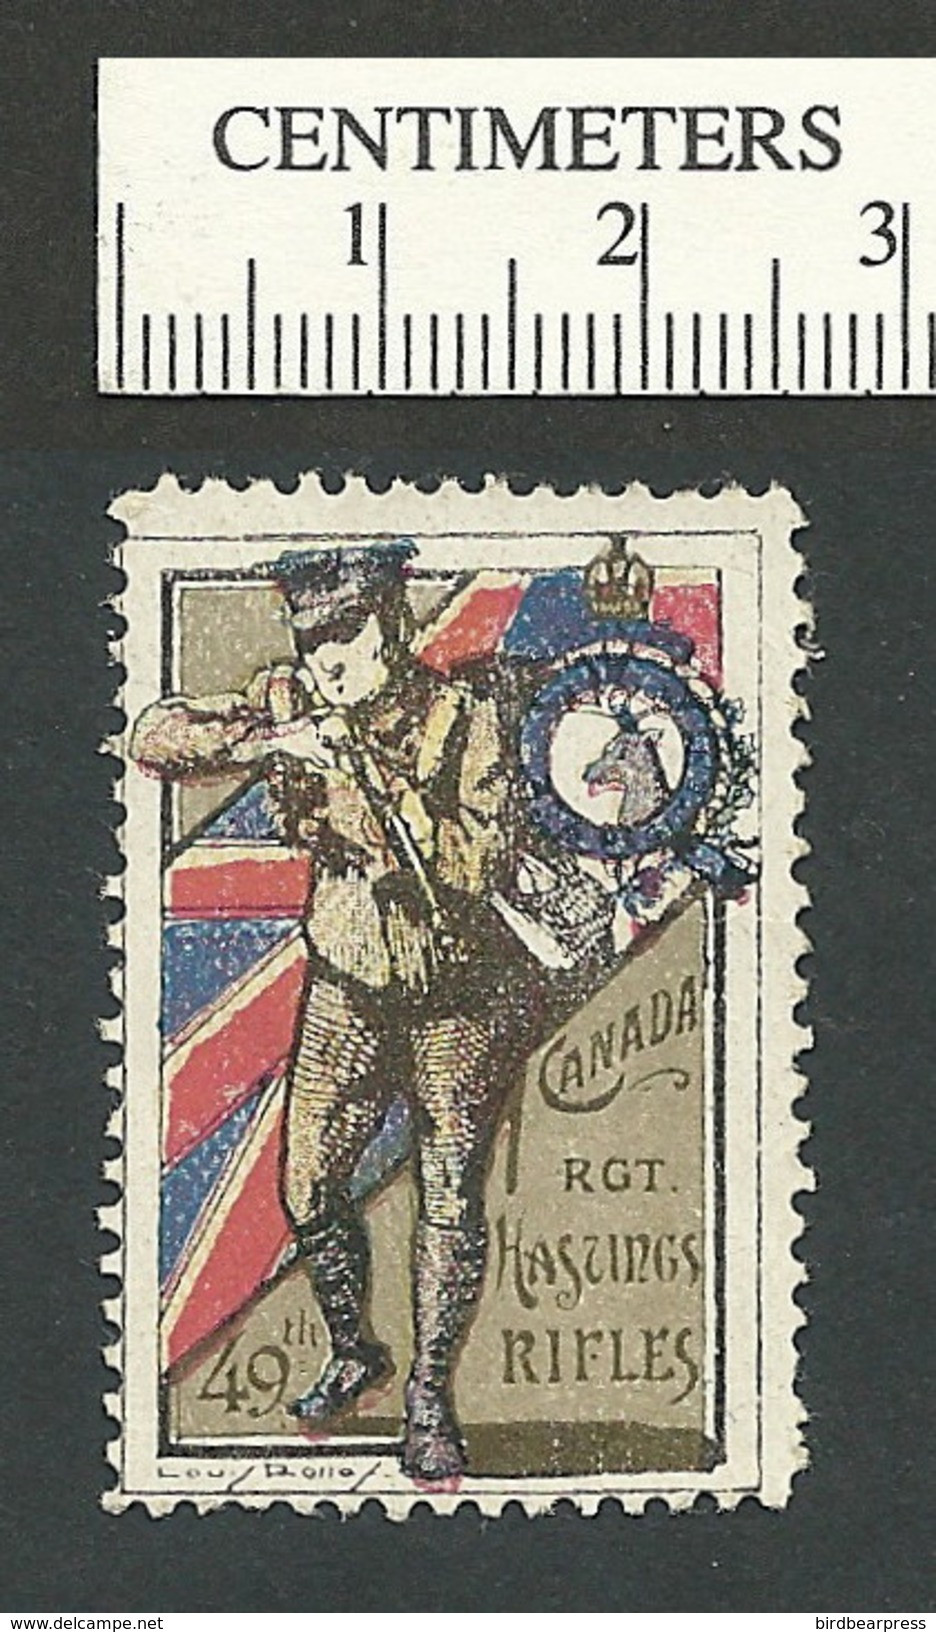 B46-45 CANADA WWI Delandre Hastings Rifles Stamp MNH Crease - Werbemarken (Vignetten)